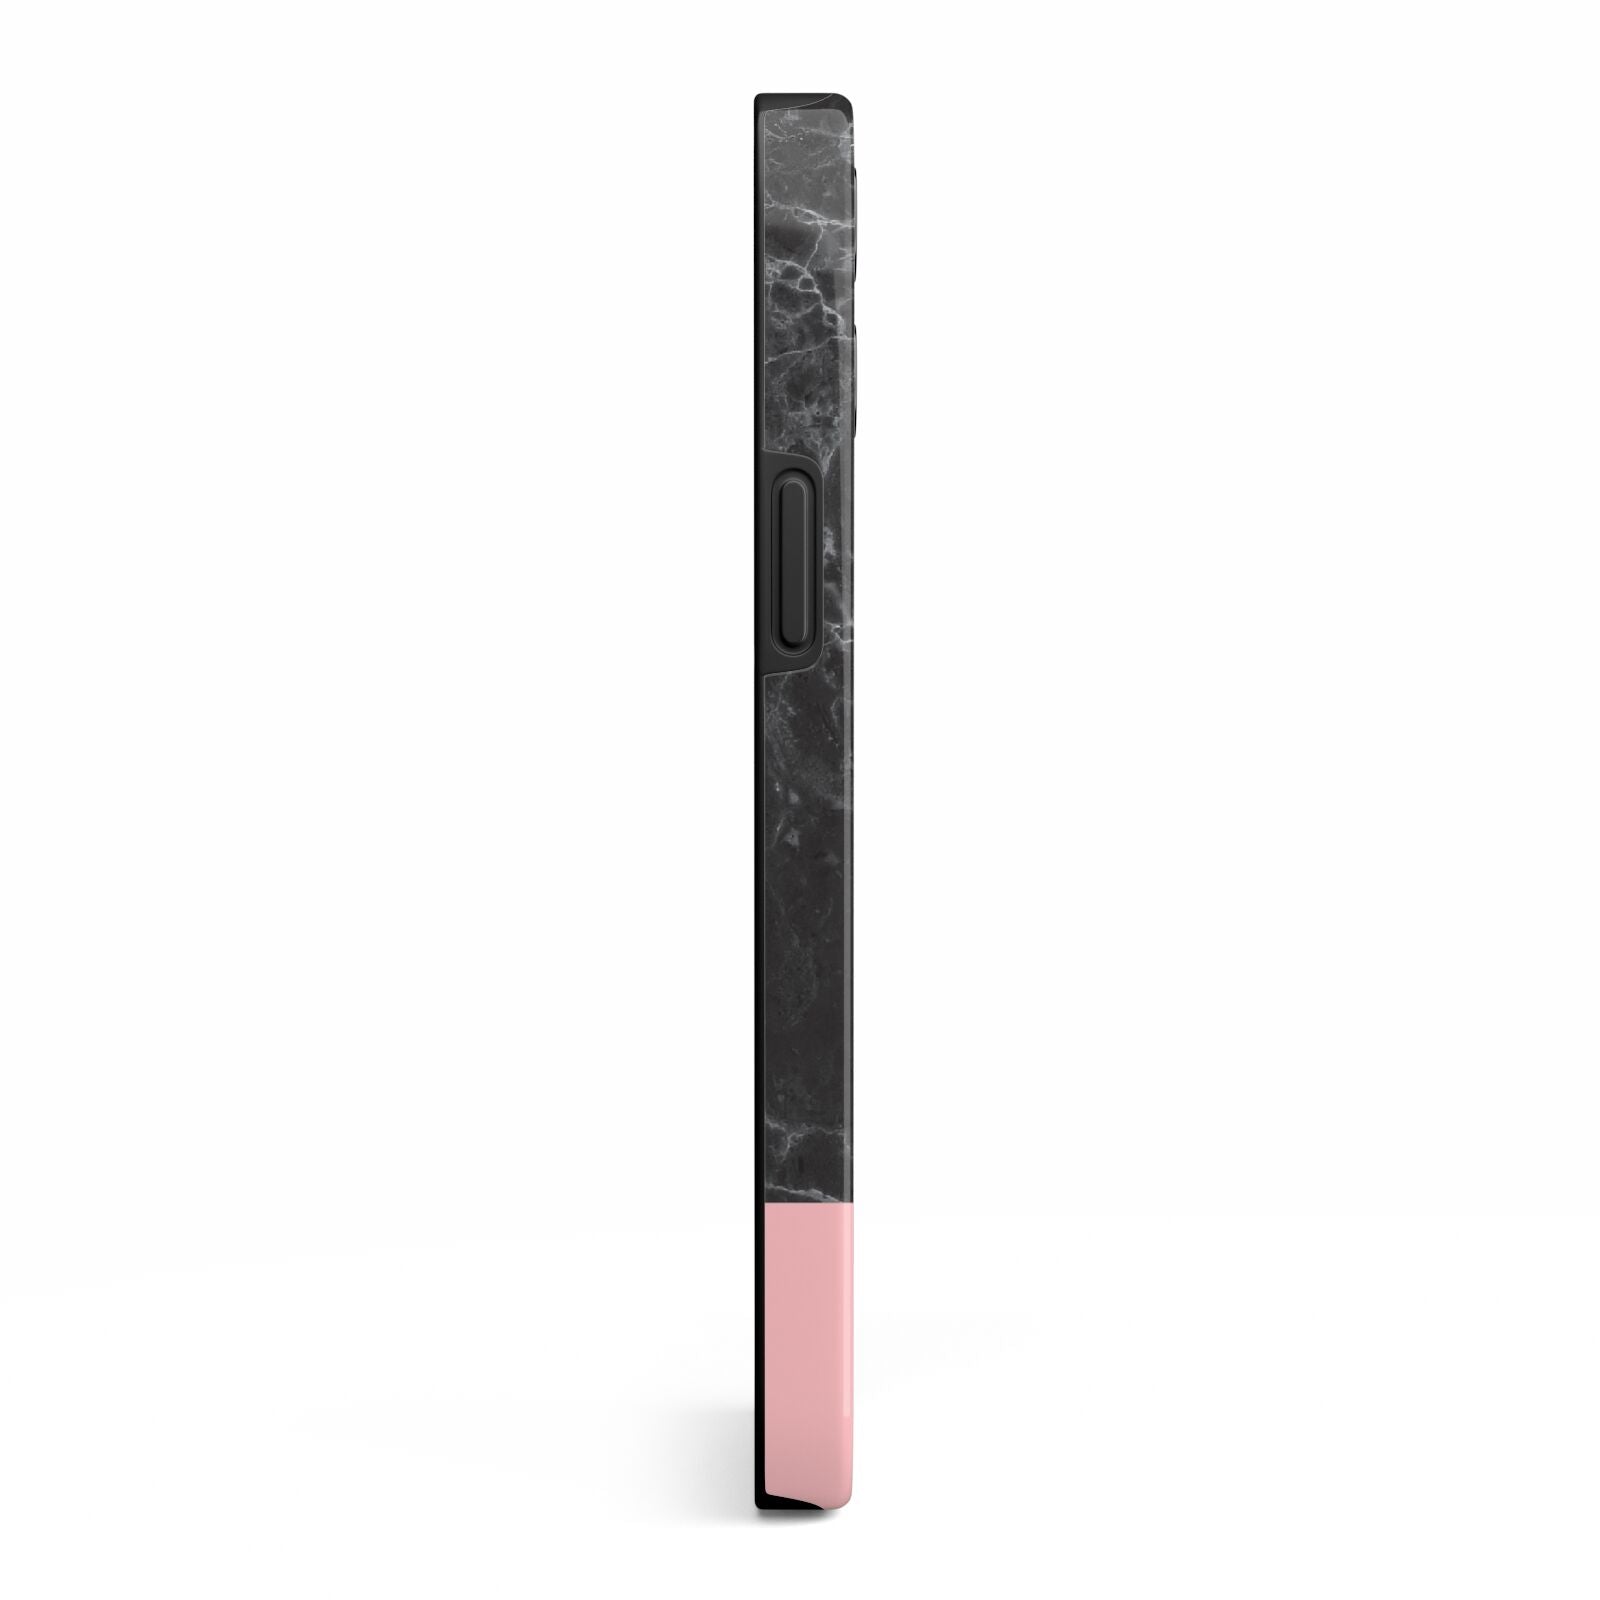 Marble Black Pink iPhone 13 Pro Max Side Image 3D Tough Case